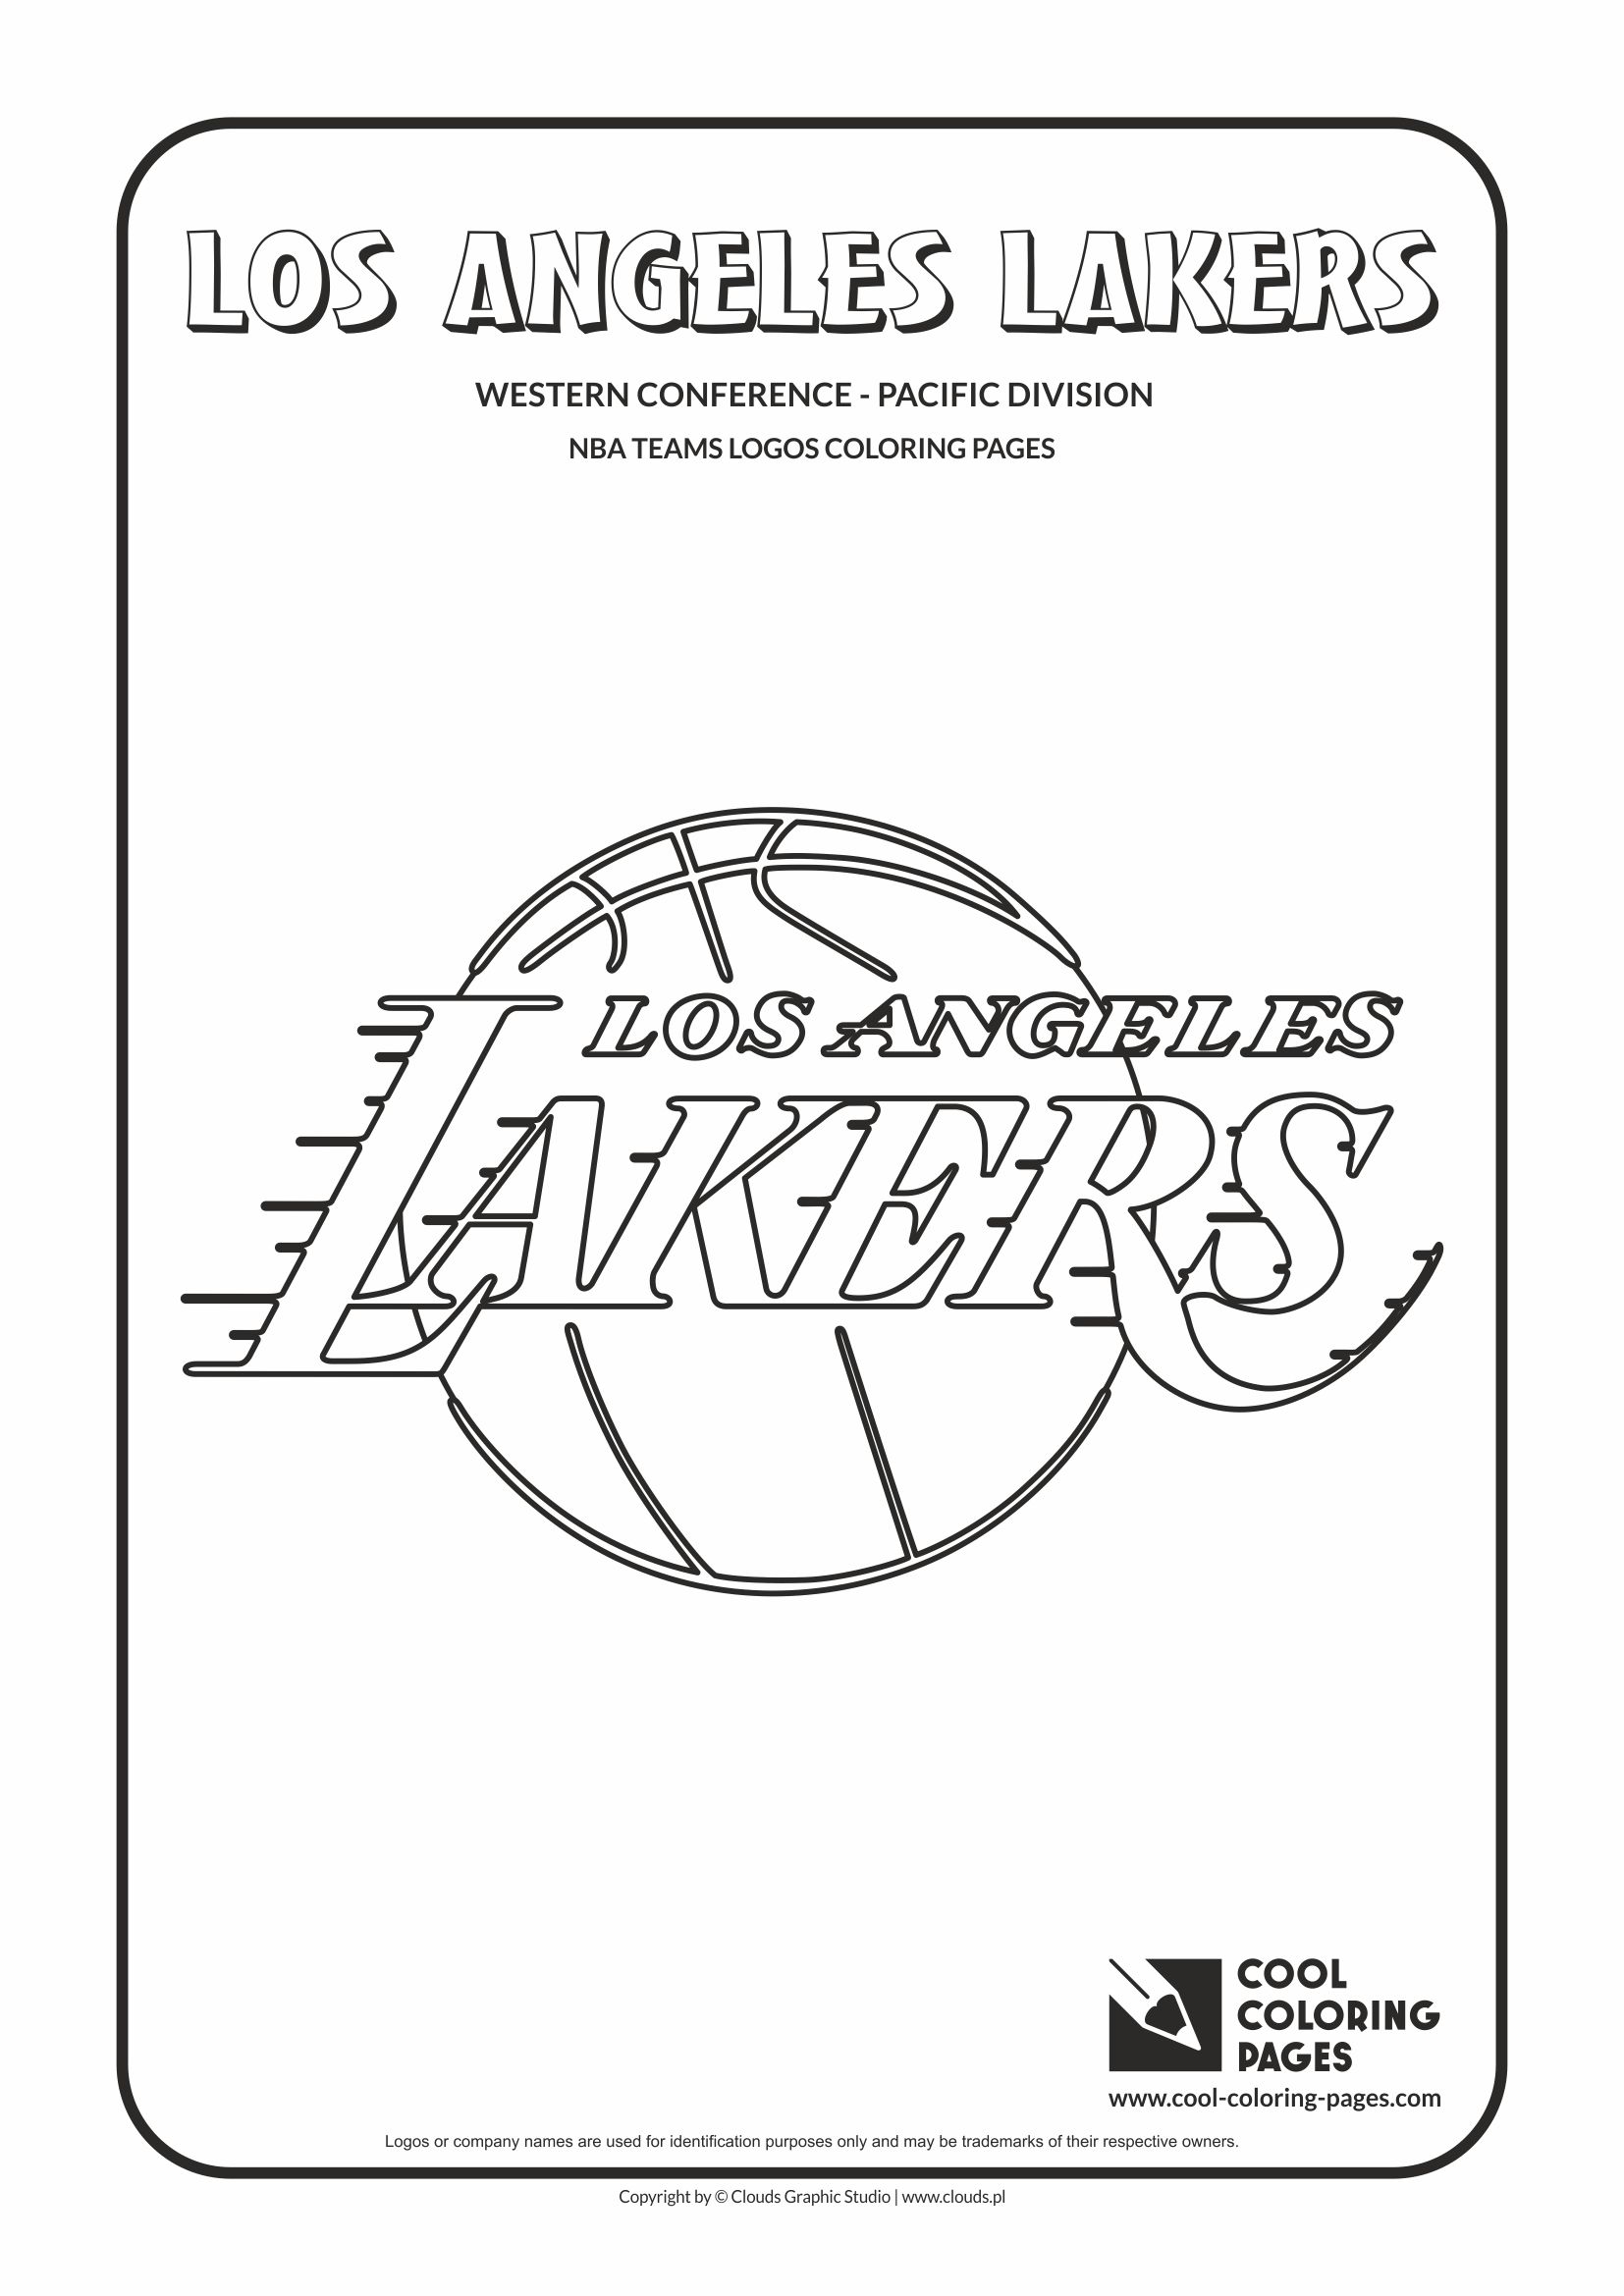 Download Cool Coloring Pages NBA teams logos coloring pages - Cool Coloring Pages | Free educational ...